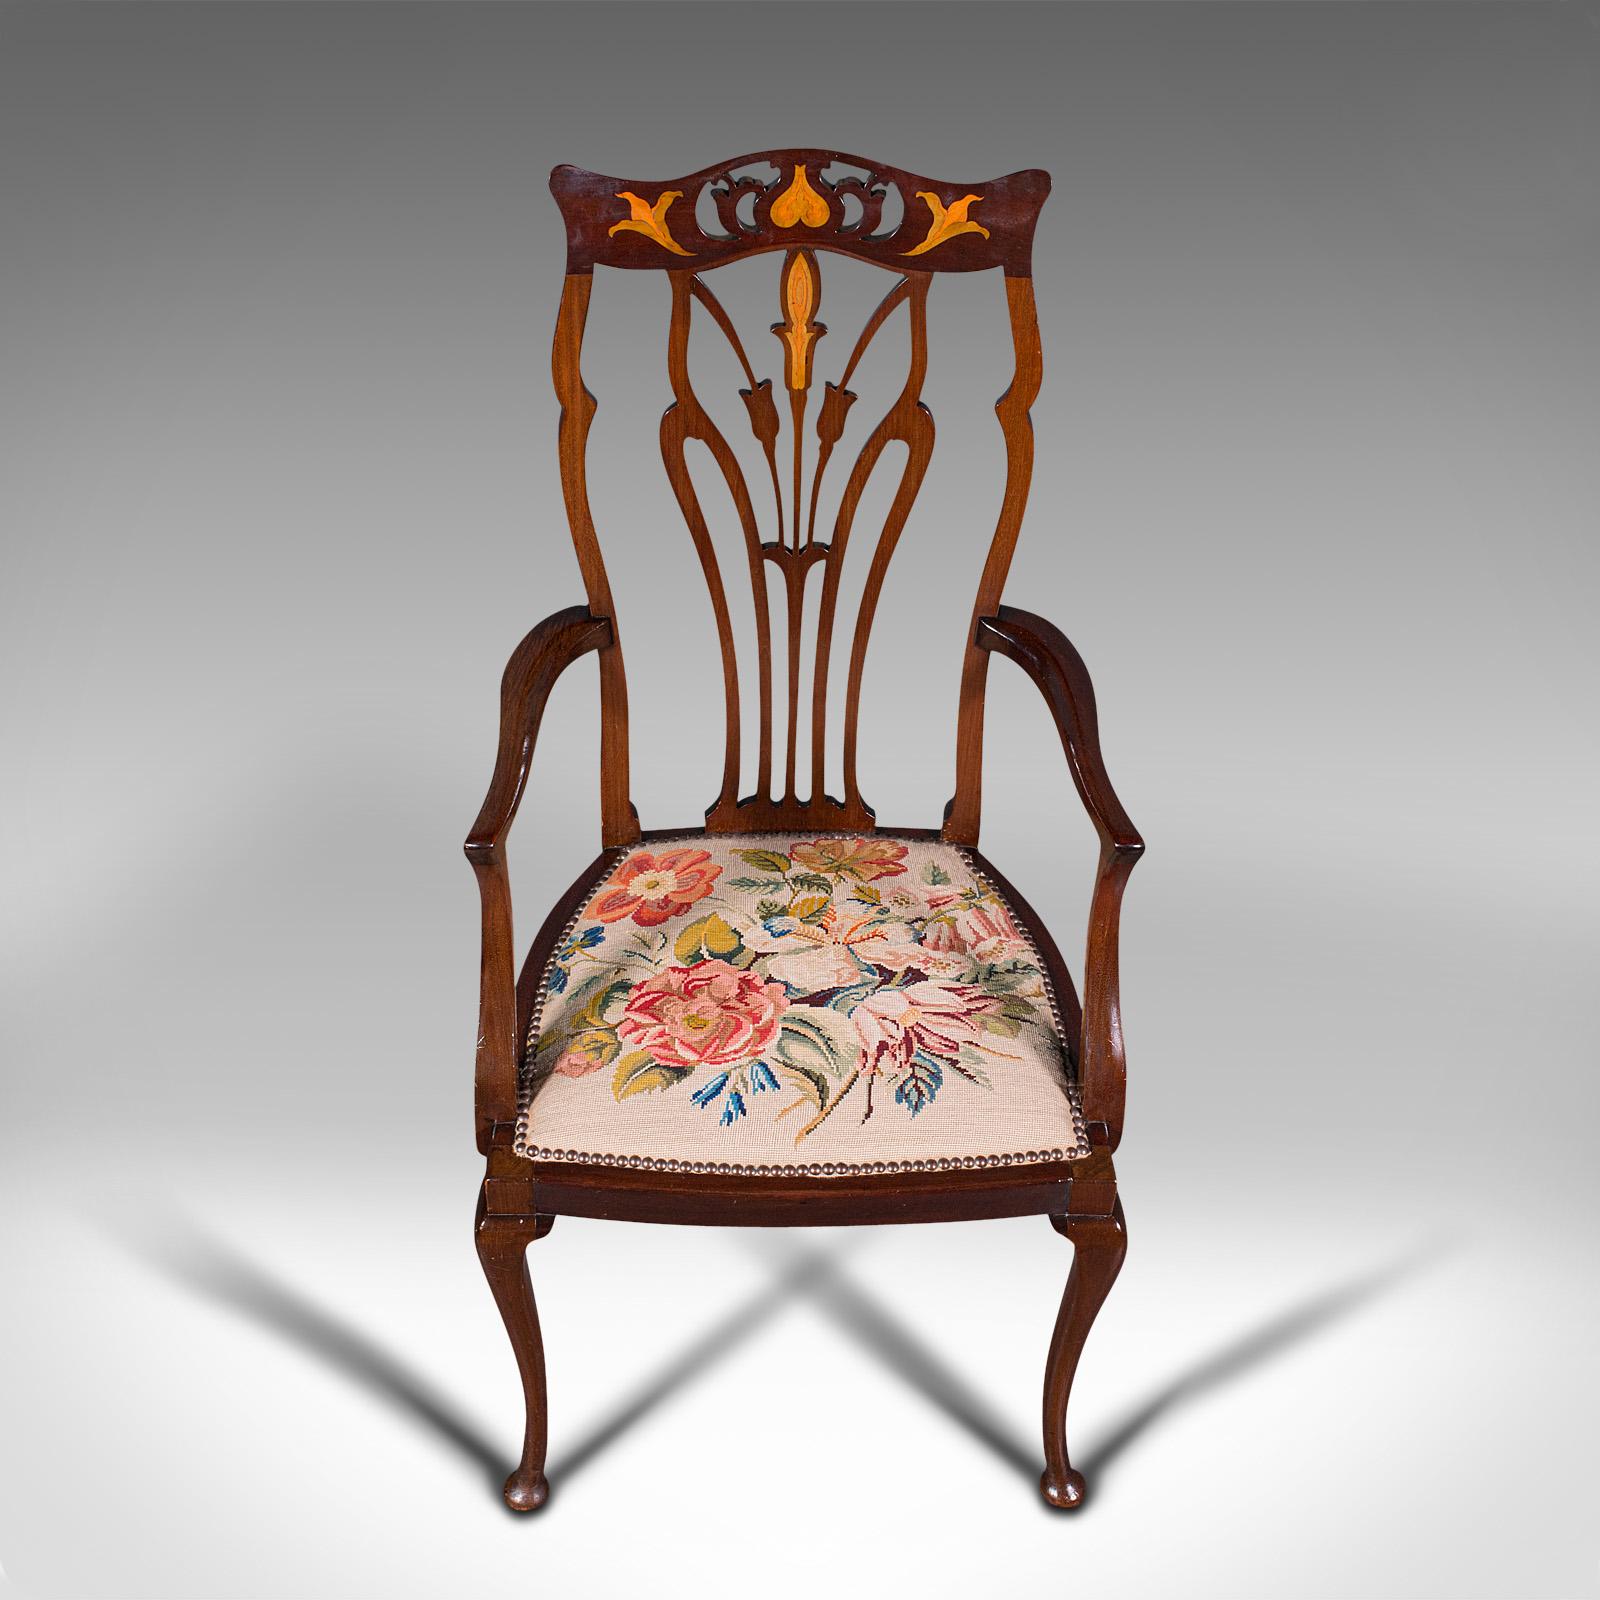 Antique Elbow Chair, English, Occasional, Art Nouveau, Libertyesque, Victorian 1